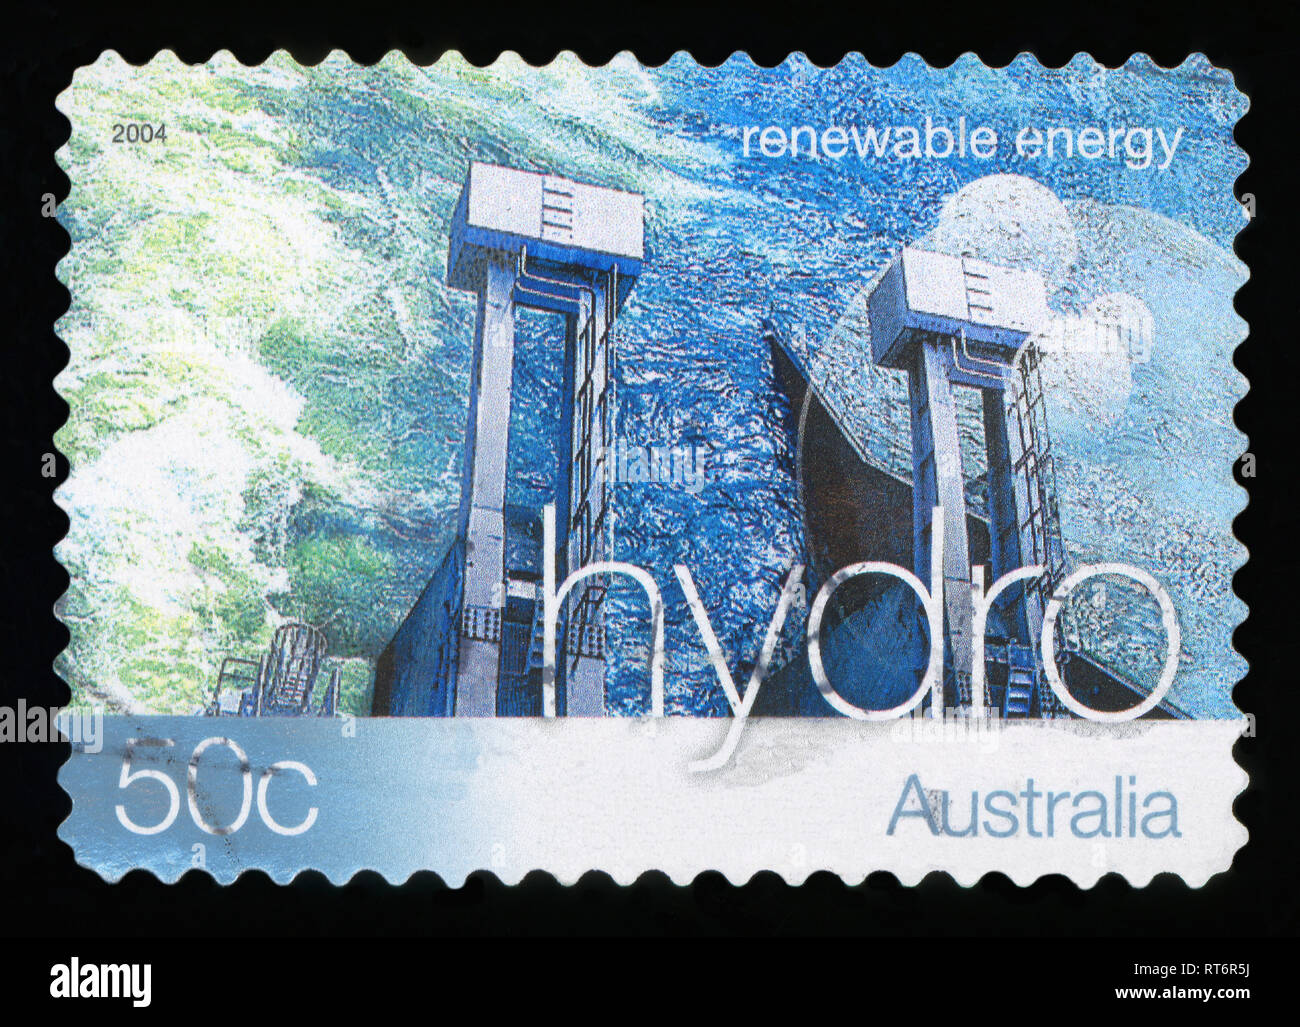 AUSTRALIA - CIRCA 2004: A used postage stamp from Australia, promoting Hydro Energy - a renewable energy source, circa 2004. Stock Photo